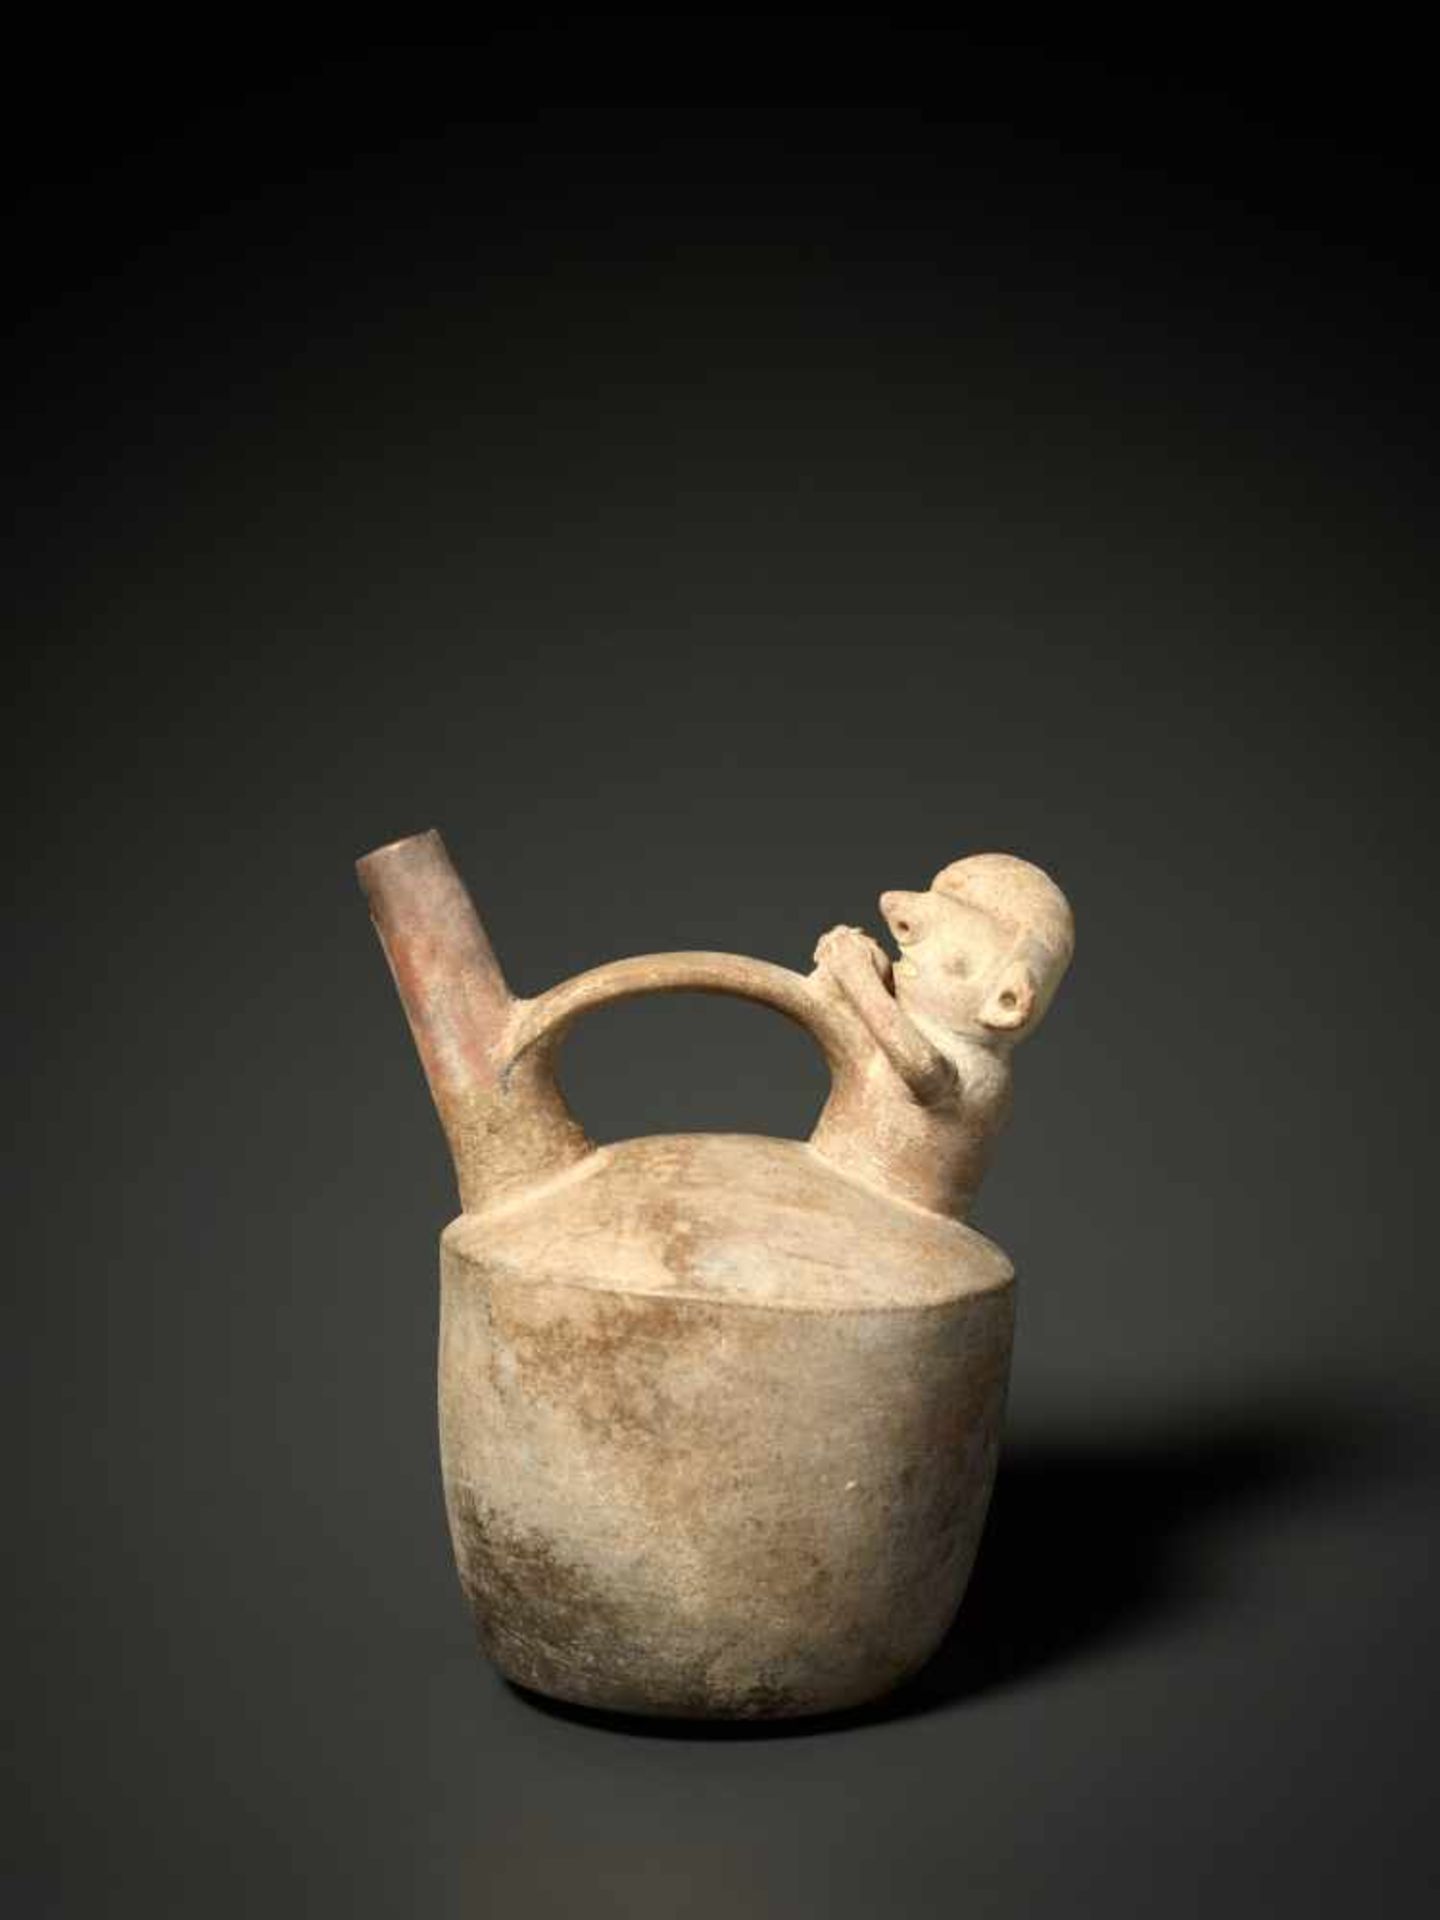 WHISTLE - SALINAR CULTURE, PERU, C. 200 BCGrayish fired claySalinar culture, Peru, c. 200 - Image 3 of 5